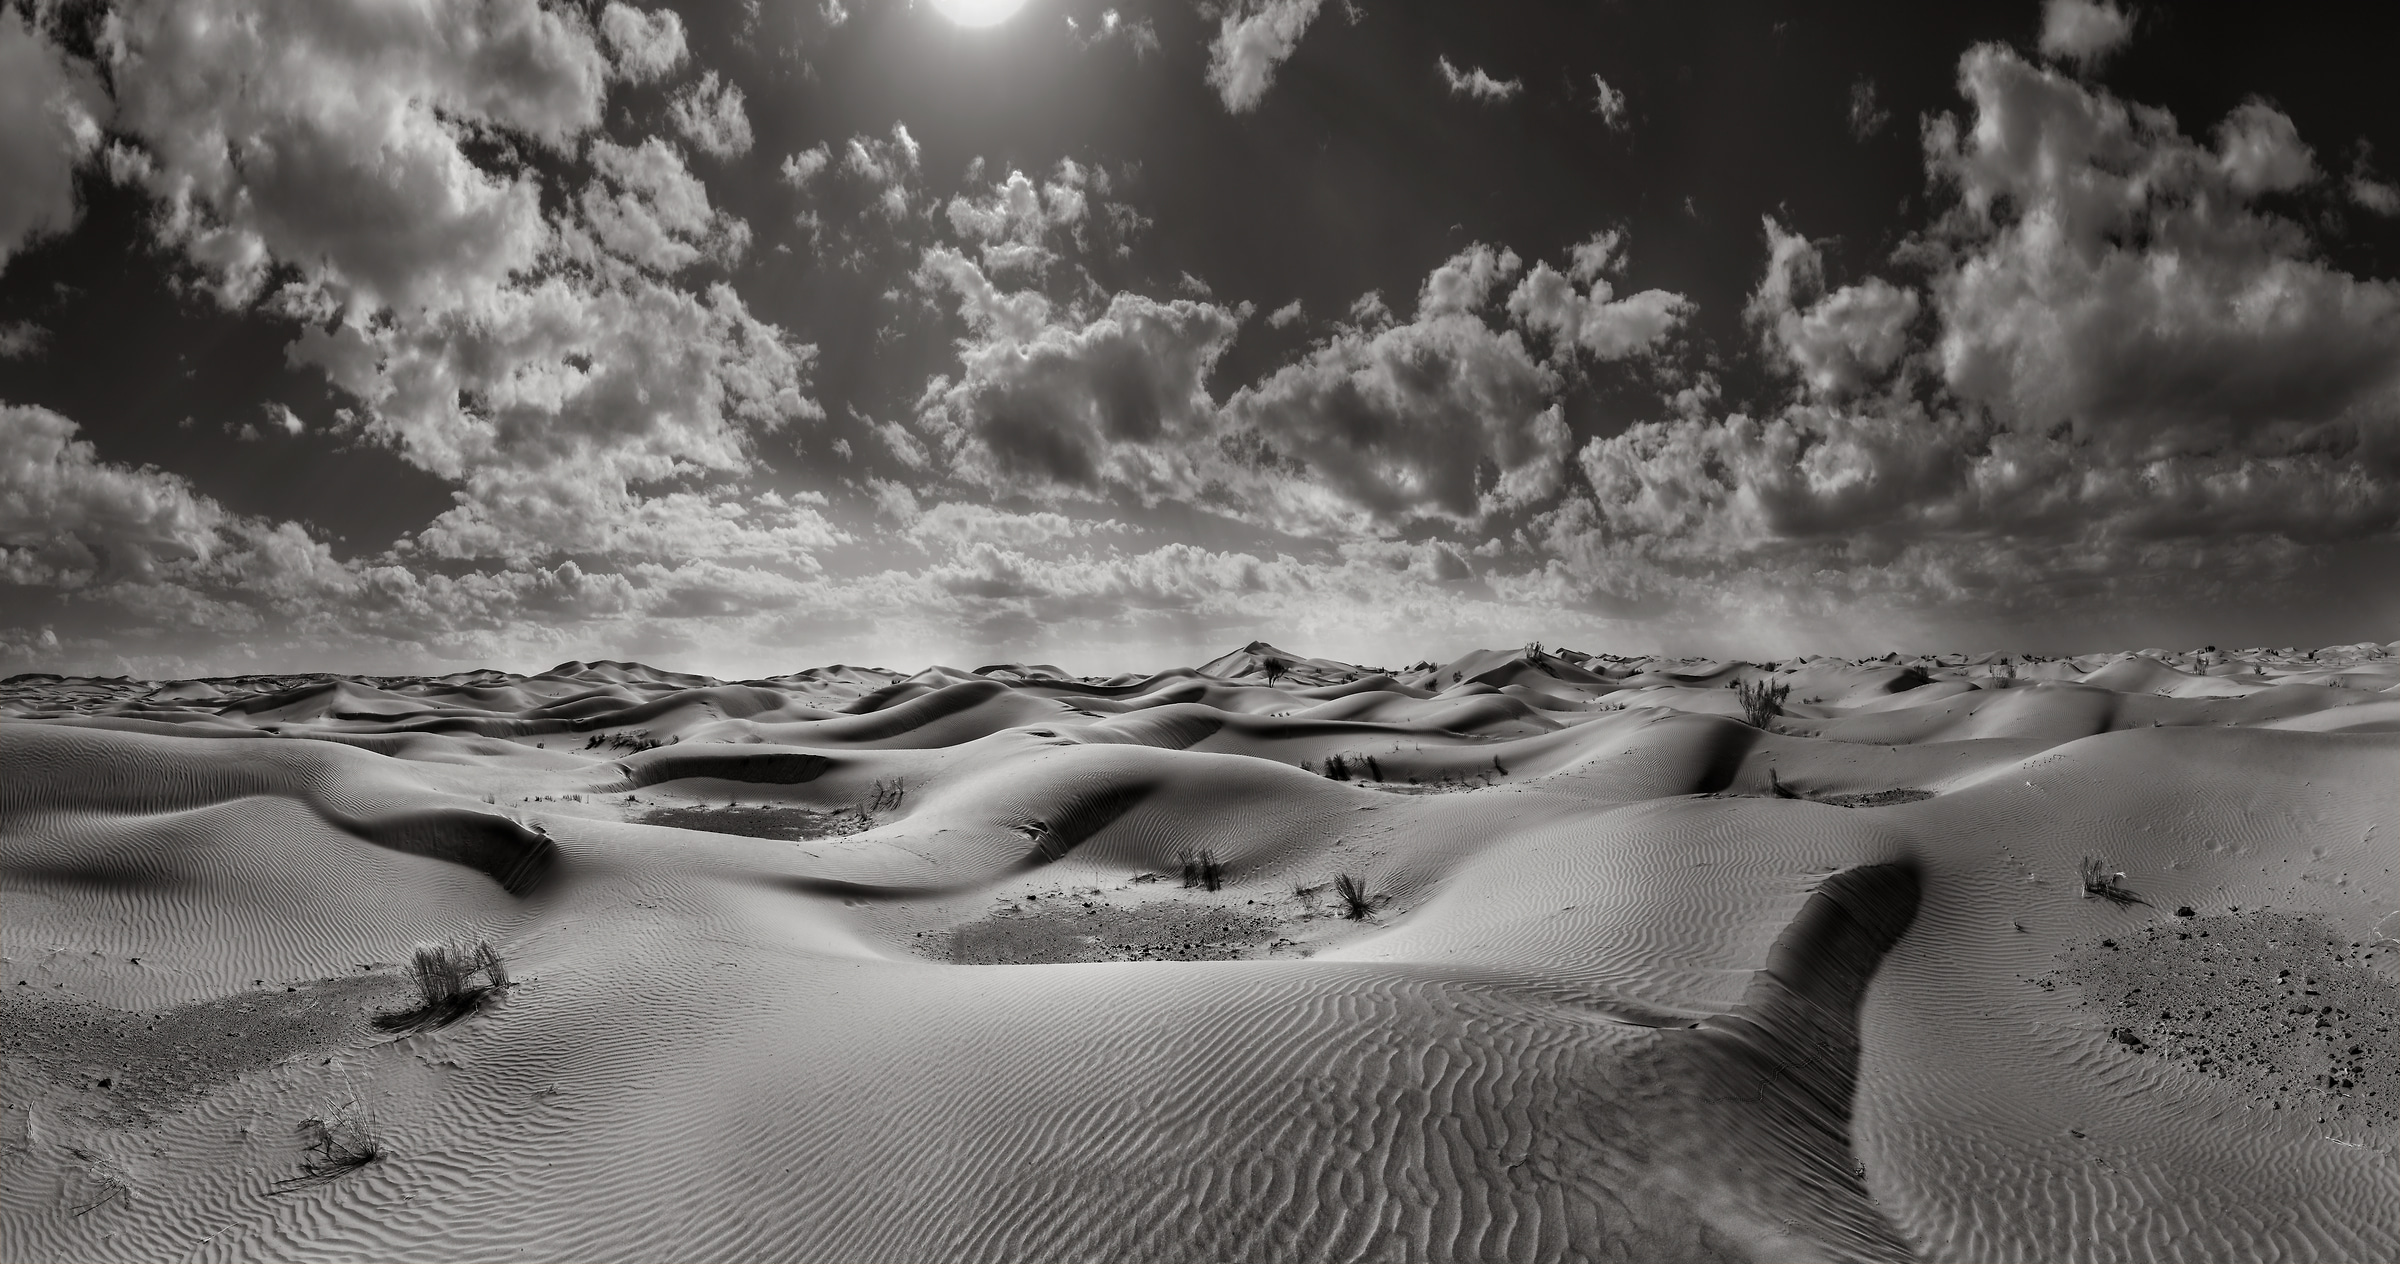 478 megapixels! A very high resolution, large-format, black & white photo of desert sand dunes in the Arabian Desert; fine art landscape photograph created by Peter Rodger in Tabuk Dunes, Tabuk, Saudi Arabia